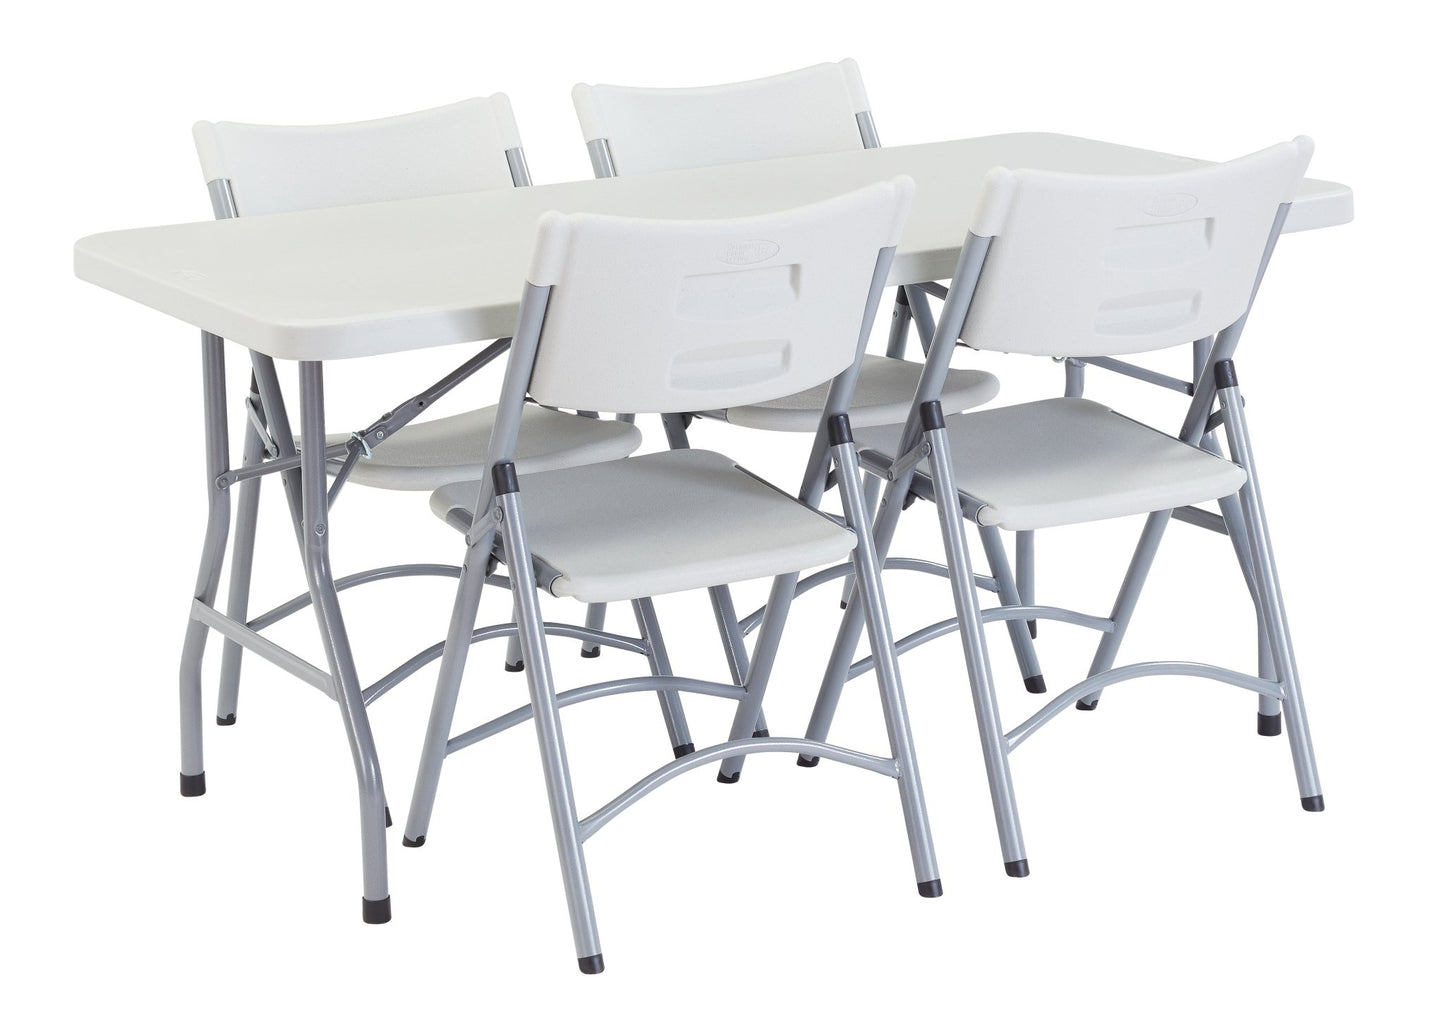 NPS Lightweight Plastic Top Folding Table - 30"W x 60"L (National Public Seating NPS-BT3060) - SchoolOutlet